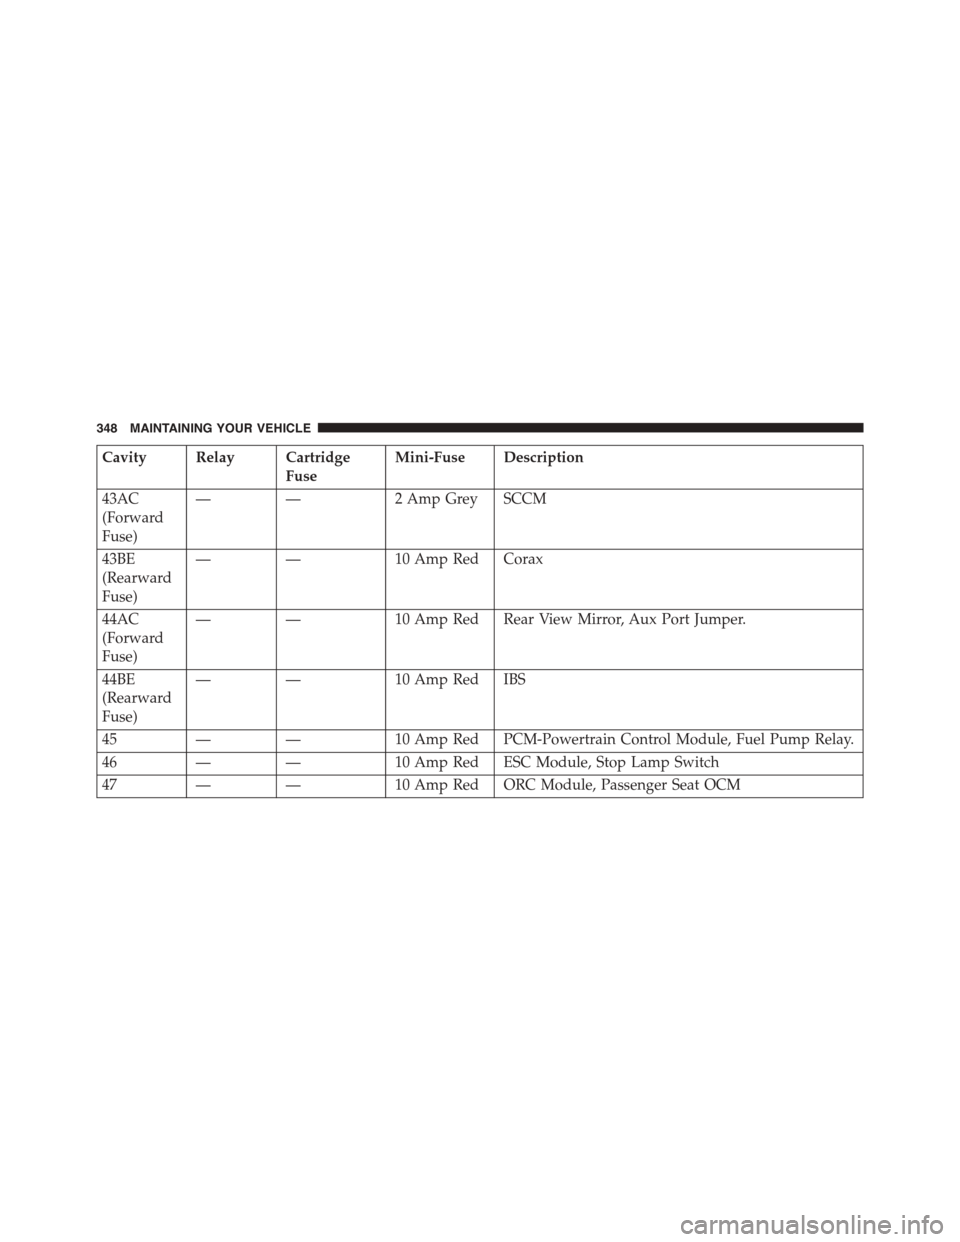 DODGE VIPER 2015 VX / 3.G Owners Manual Cavity Relay Cartridge
Fuse
Mini-Fuse Description
43AC
(Forward
Fuse)
— — 2 Amp Grey SCCM
43BE
(Rearward
Fuse)
— — 10 Amp Red Corax
44AC
(Forward
Fuse)
— — 10 Amp Red Rear View Mirror, Aux